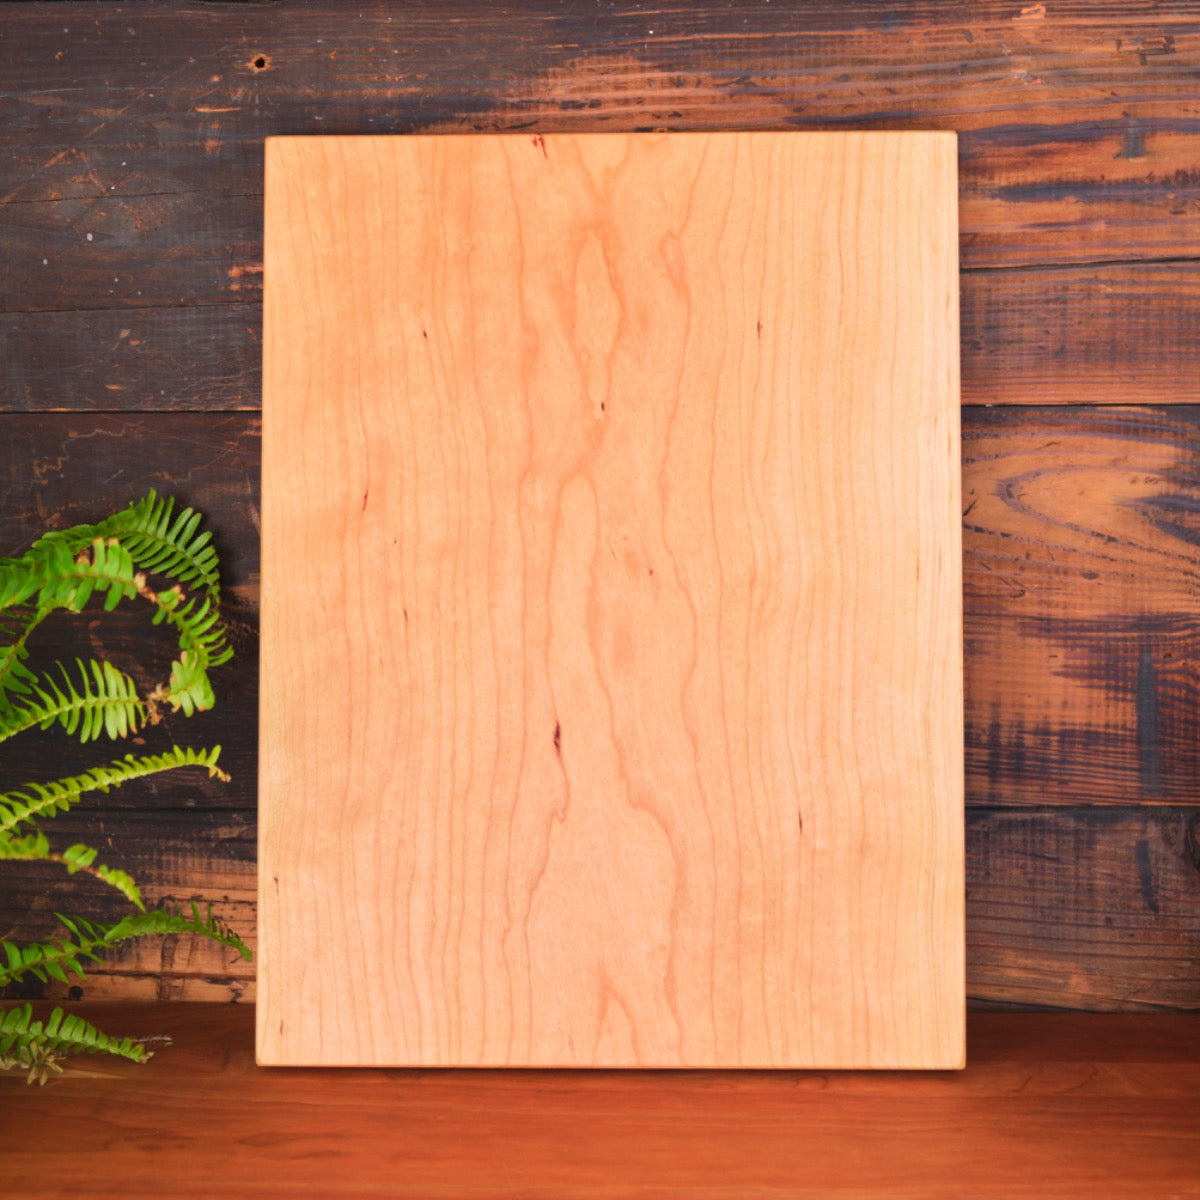 Solid Cherry Wood Plank/Board - Cutting Board - Charcuterie Board